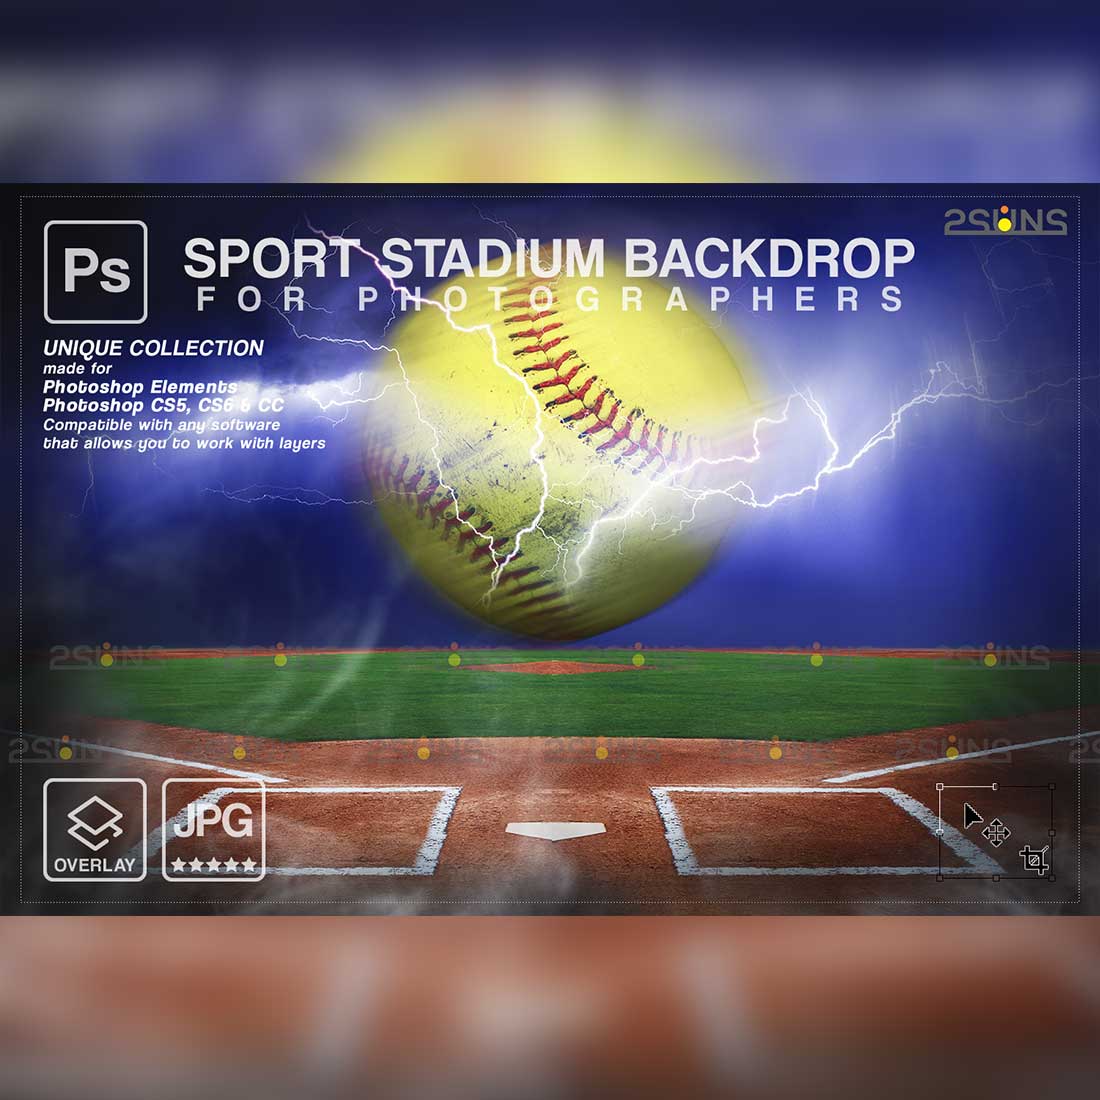 Softball Stylish Backdrop Sports Digital Background Overlay Preview Image.